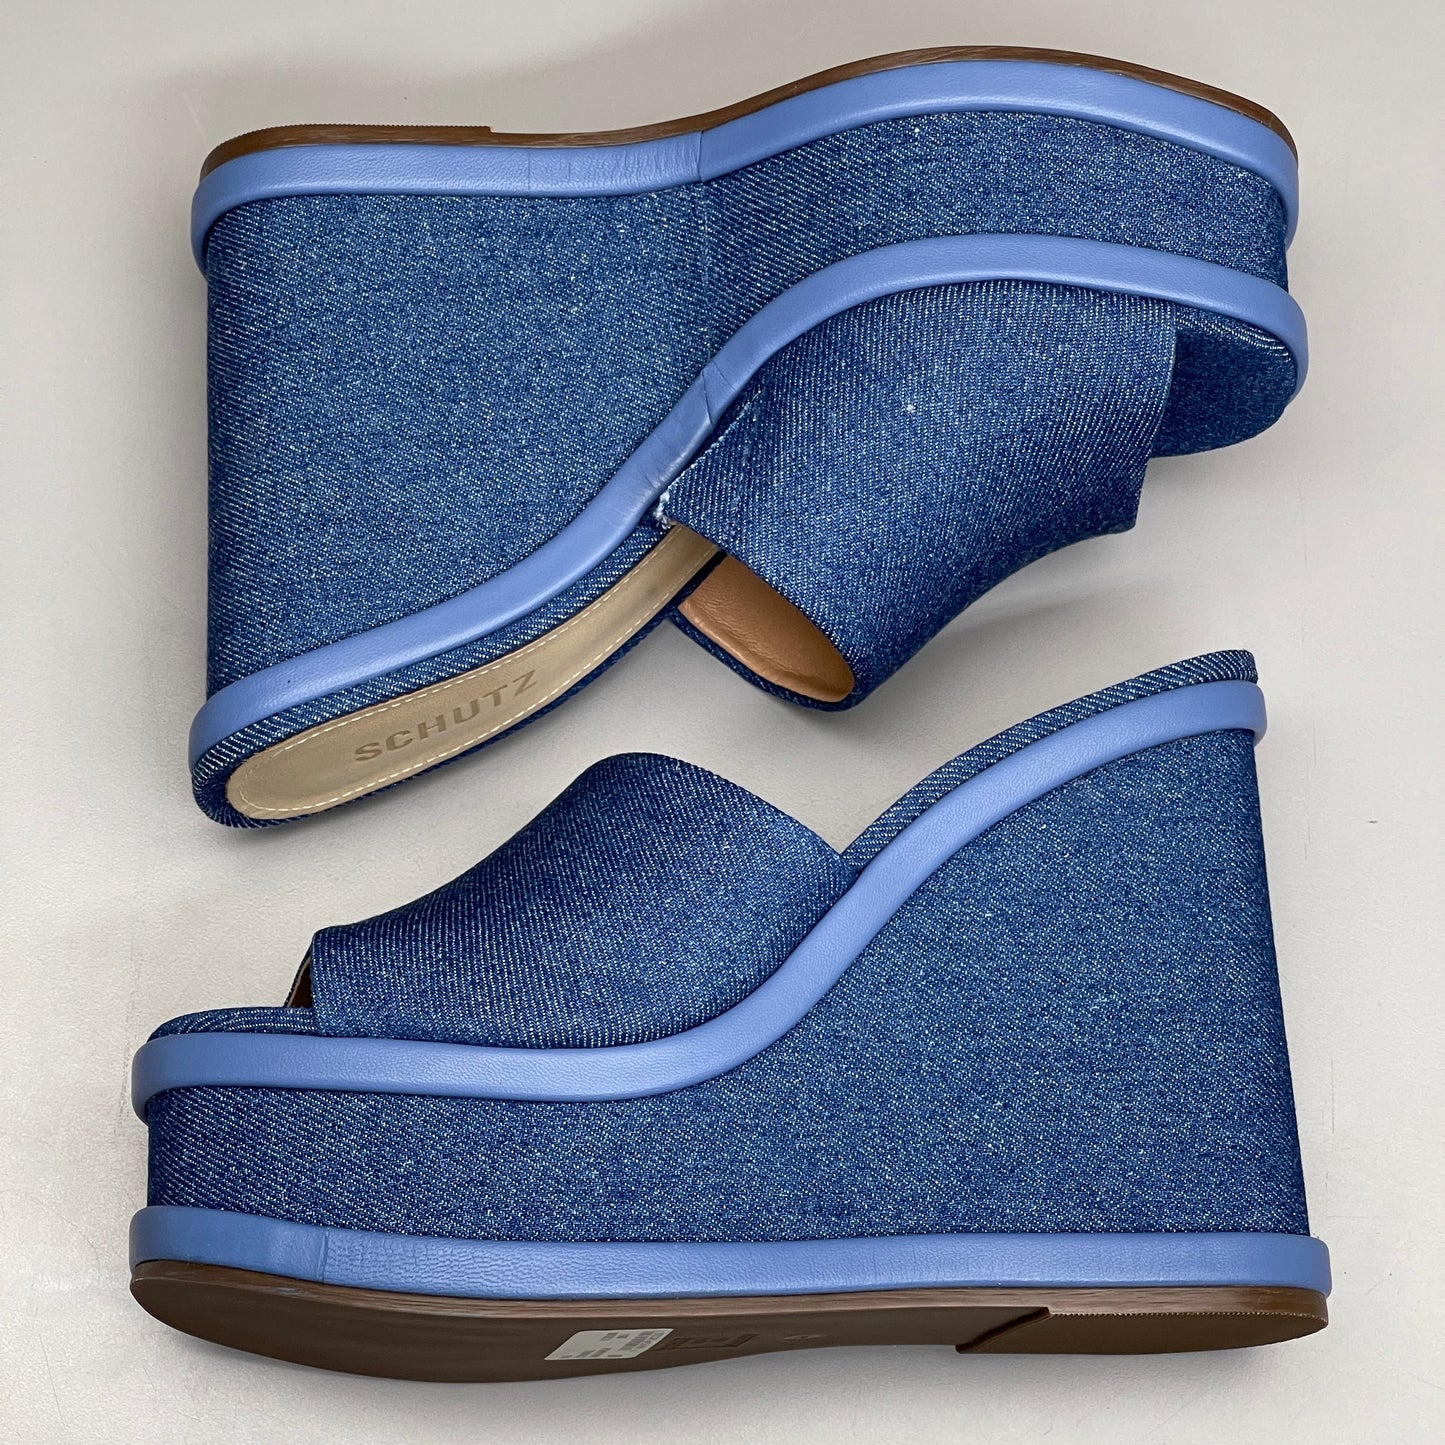 SCHUTZ Dalle Denim Women's Wedge Sandal Blue Platform Shoe Sz 10B (New)